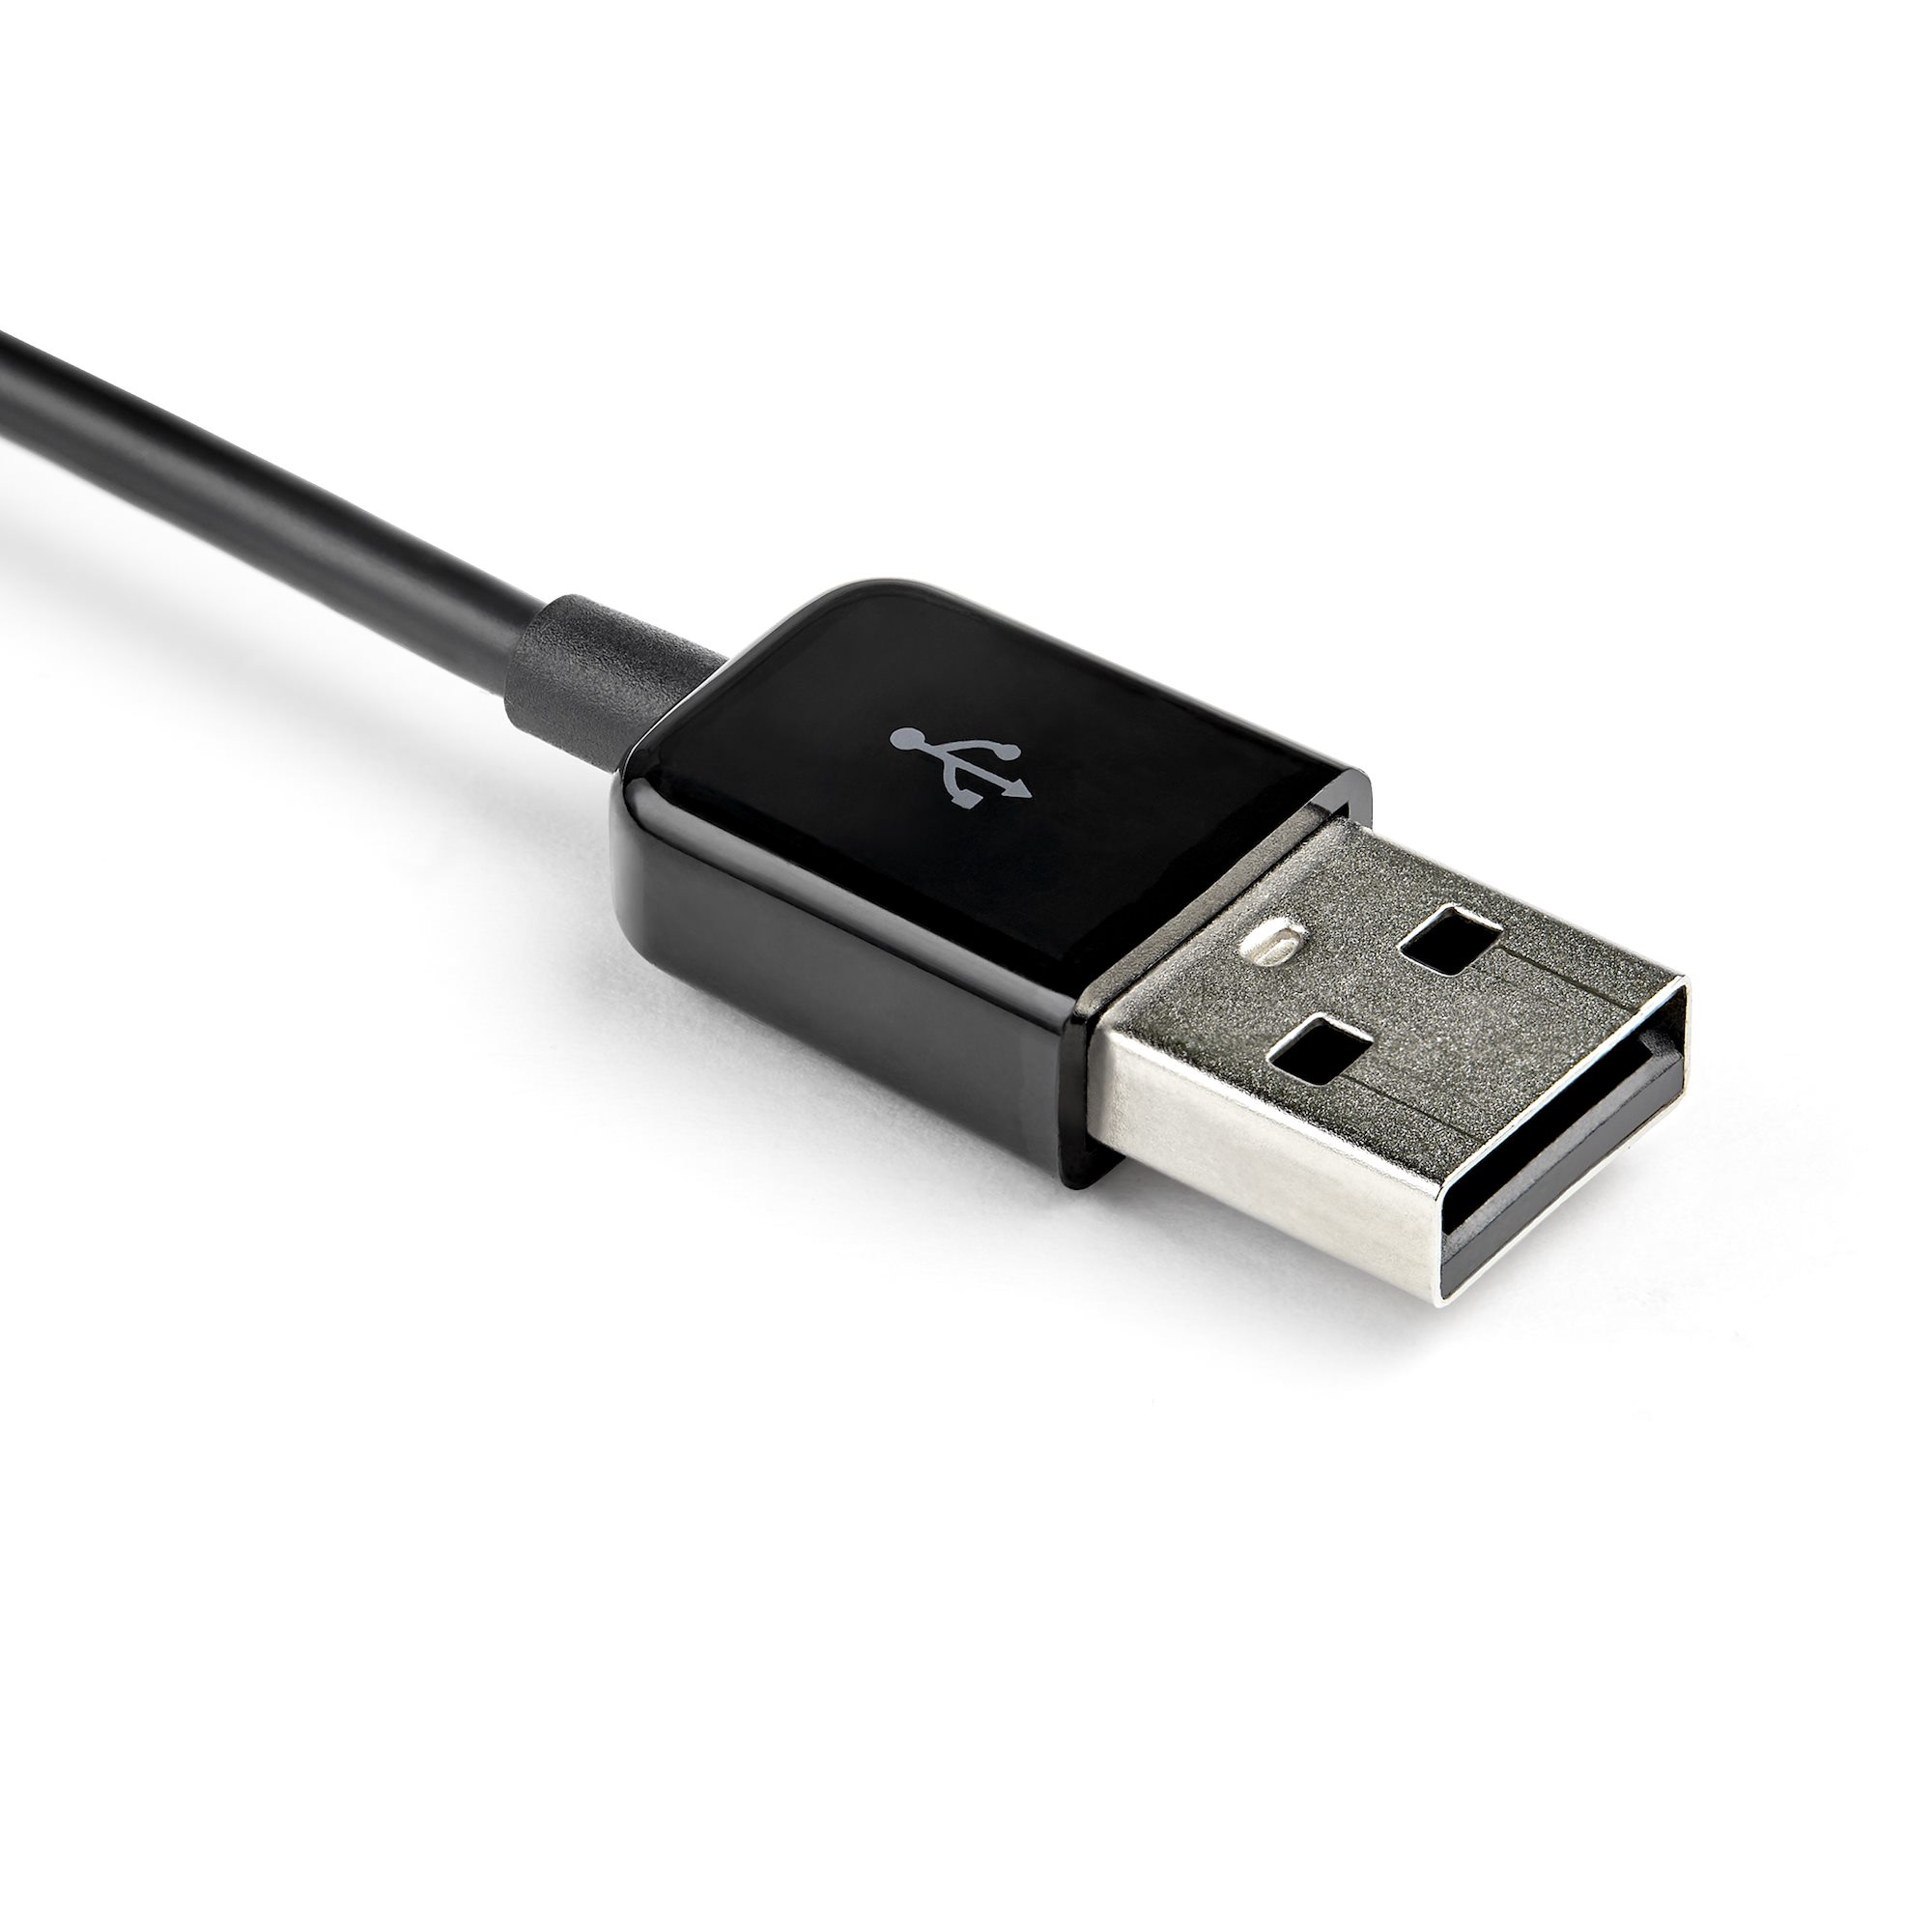 VGA - HDMI 変換アダプタケーブル 2m USBバスパワー 1080p